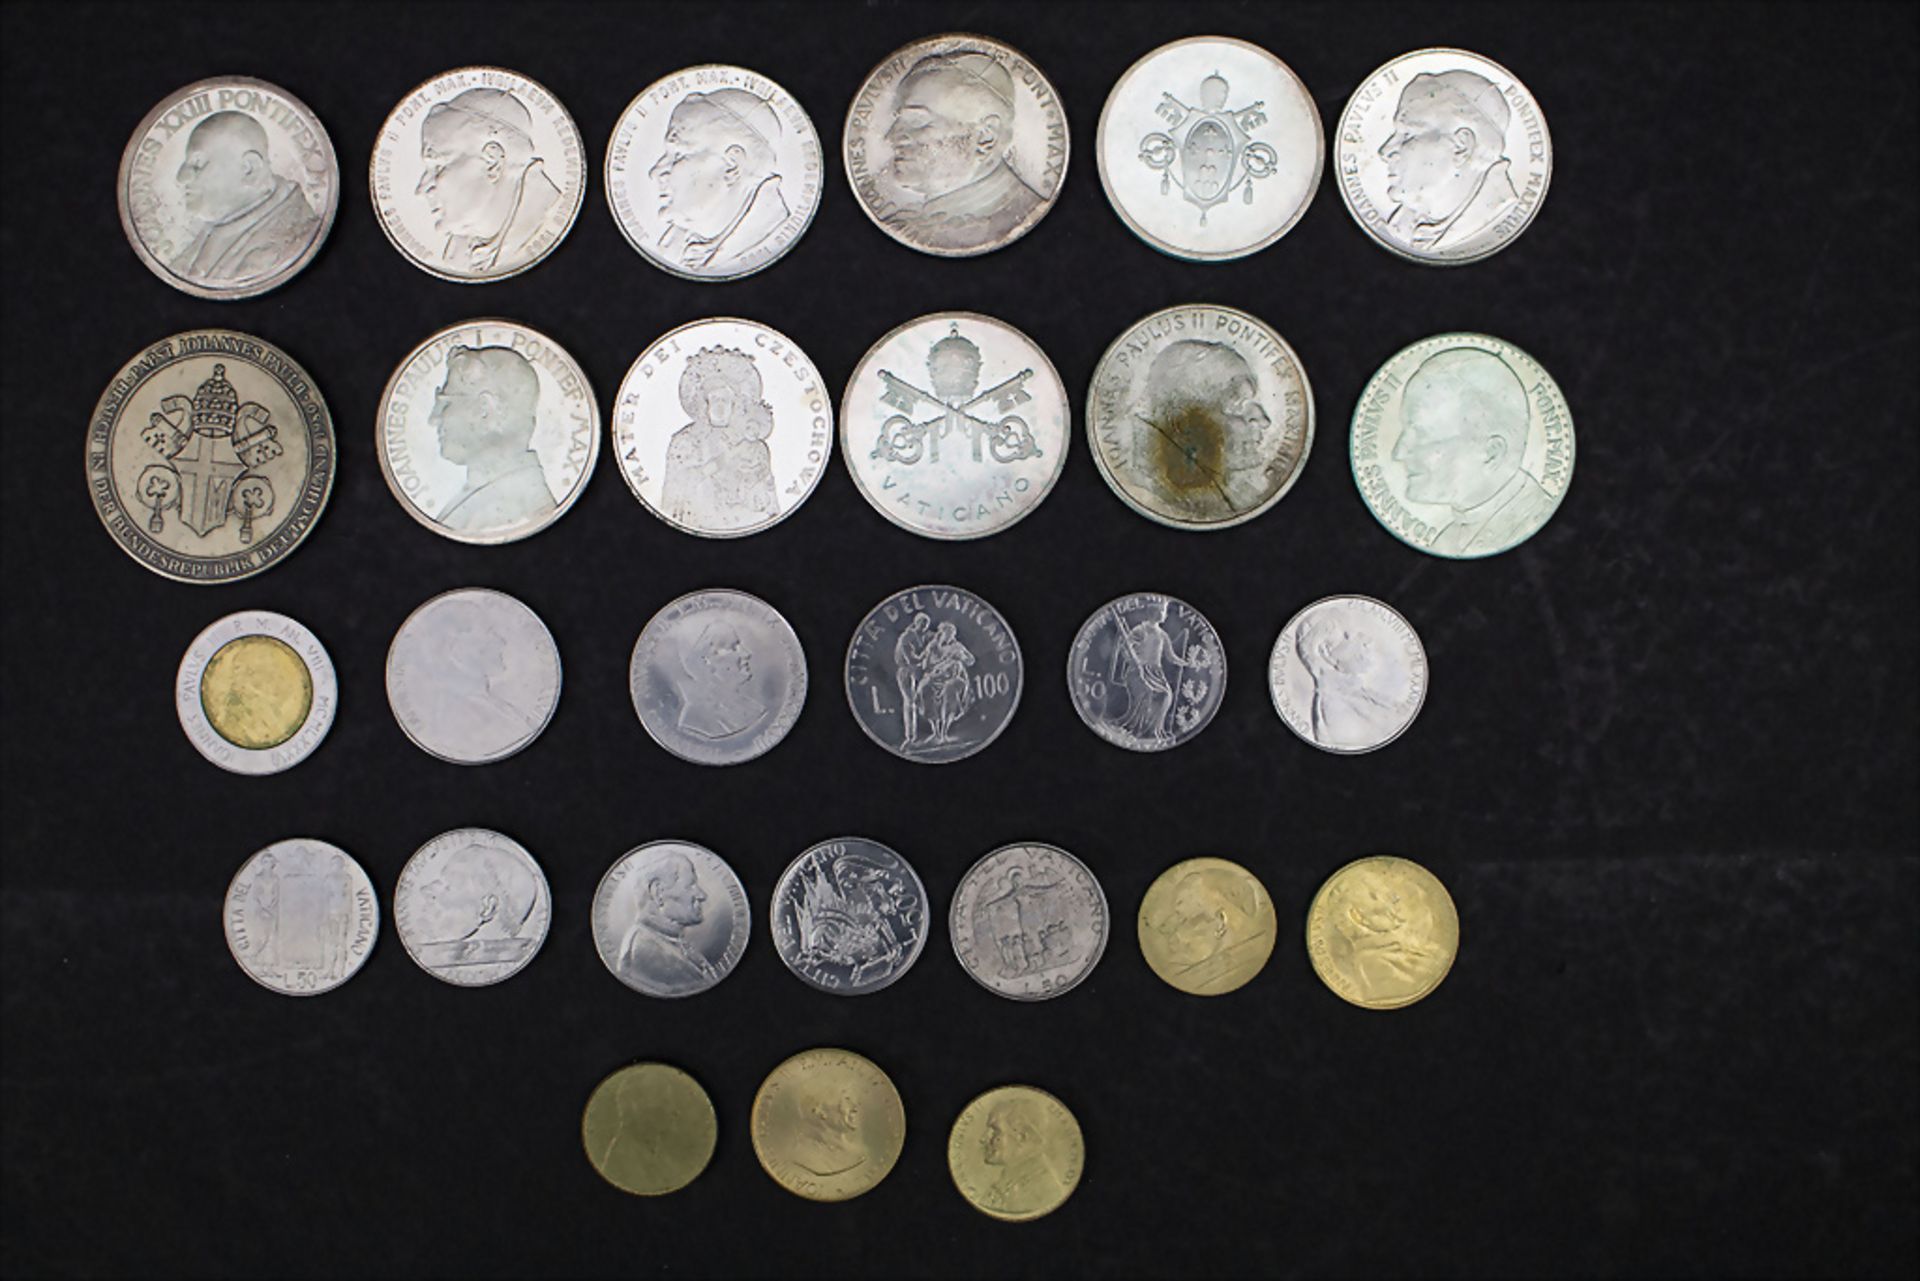 Sammlung Münzen und Medaillen des Vatikan / A collection of Vatican coins and medals - Image 6 of 10